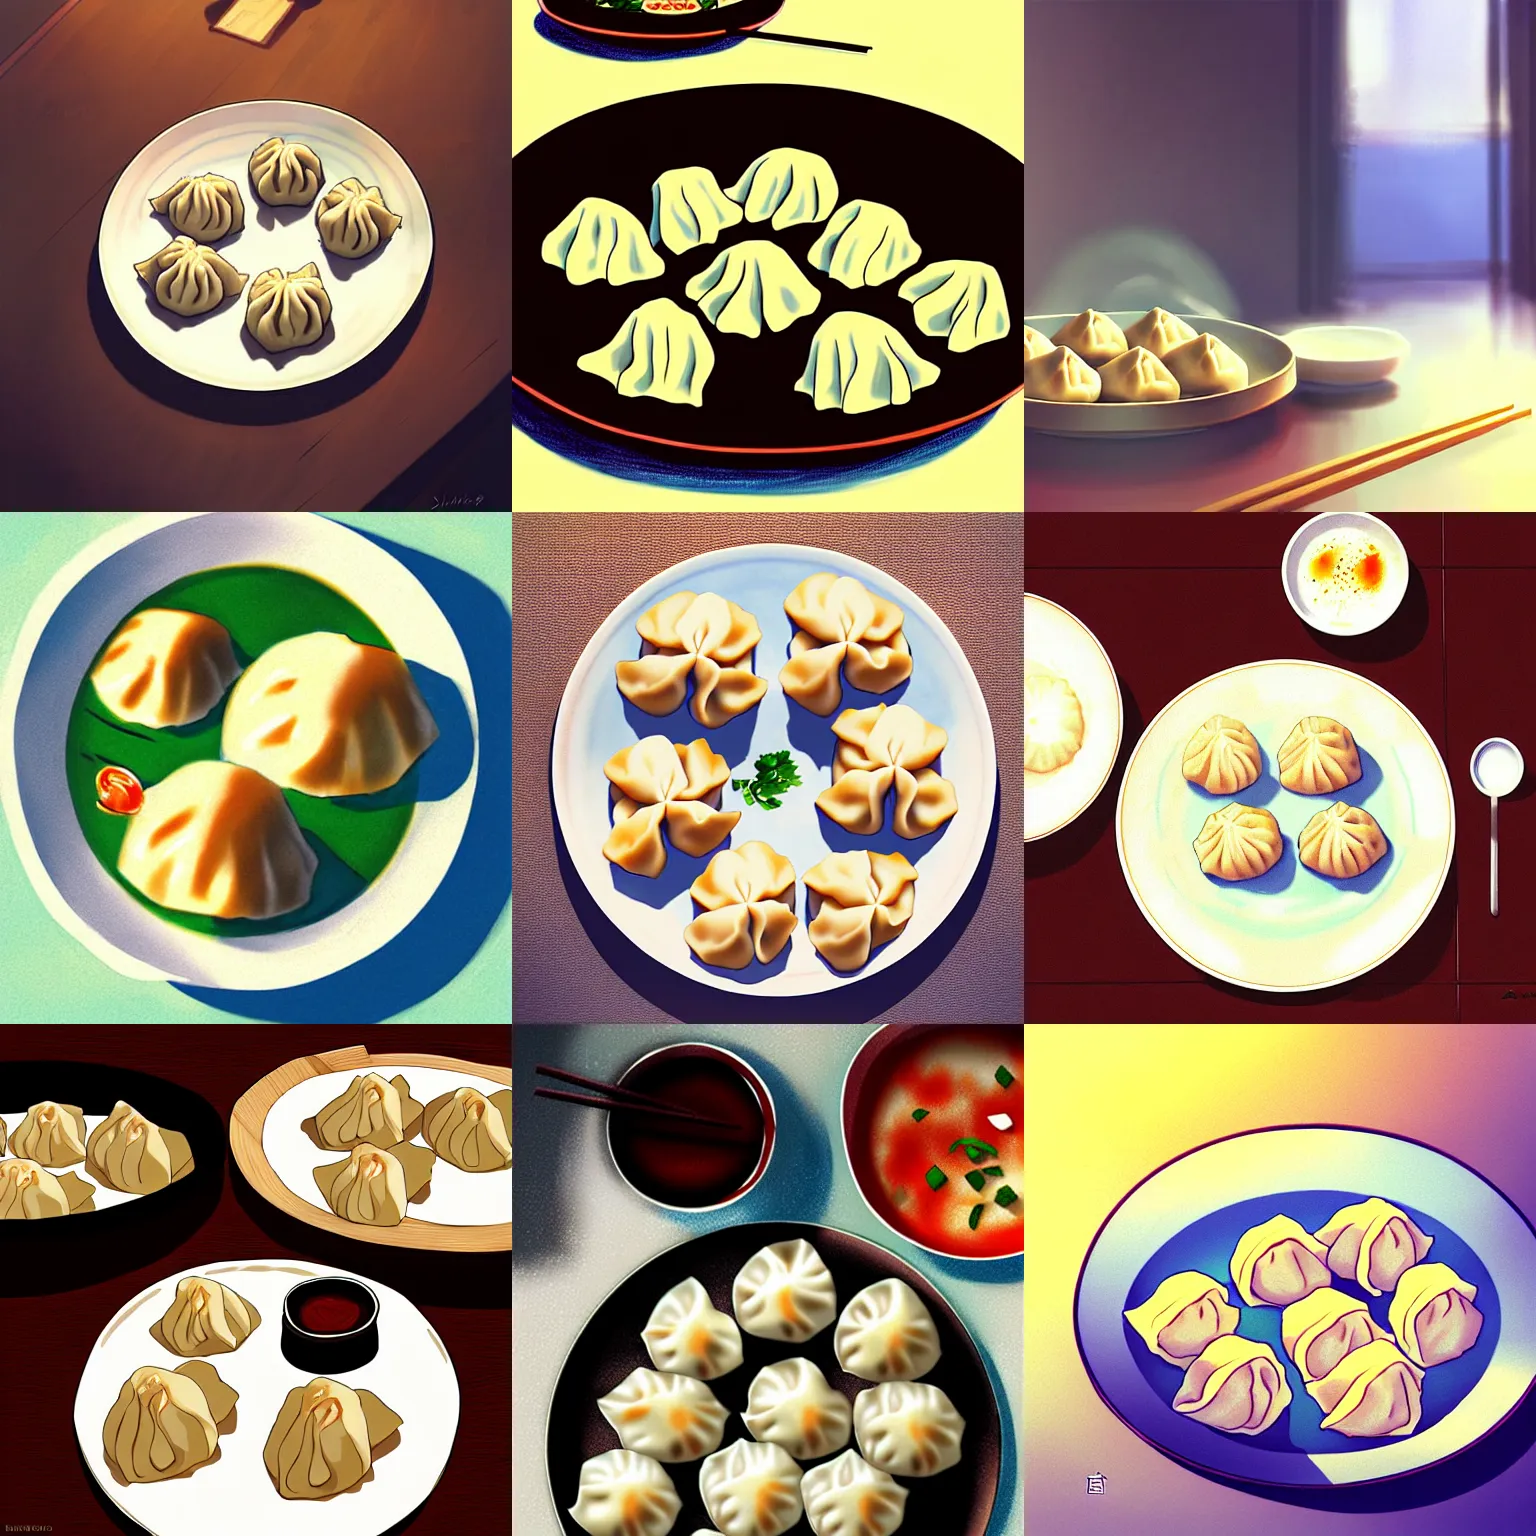 Prompt: dumplings on a plate, by makoto shinkai, digital art, illustrations